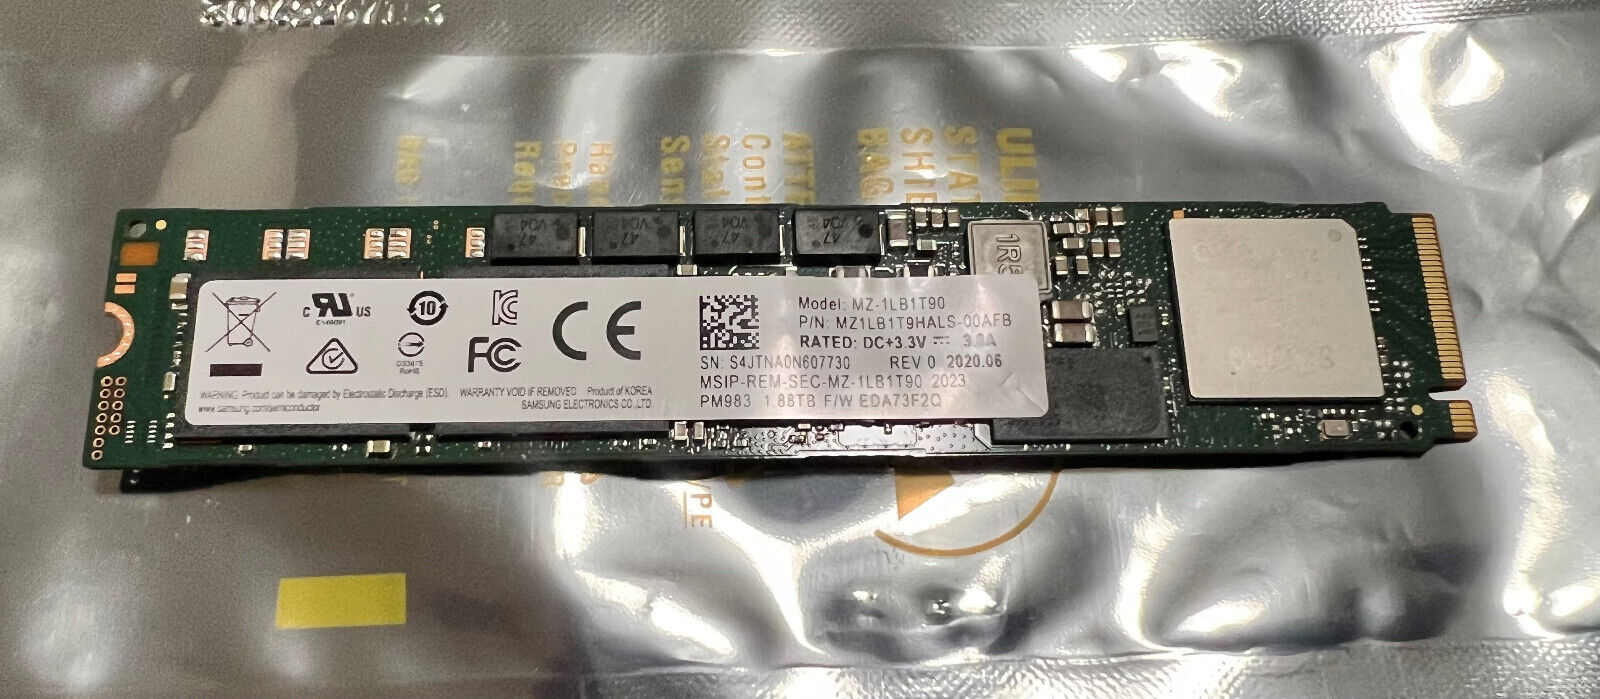 Samsung PM983 SSD M.2 22110 NVMe PCIe 3.0x4 1.88TB